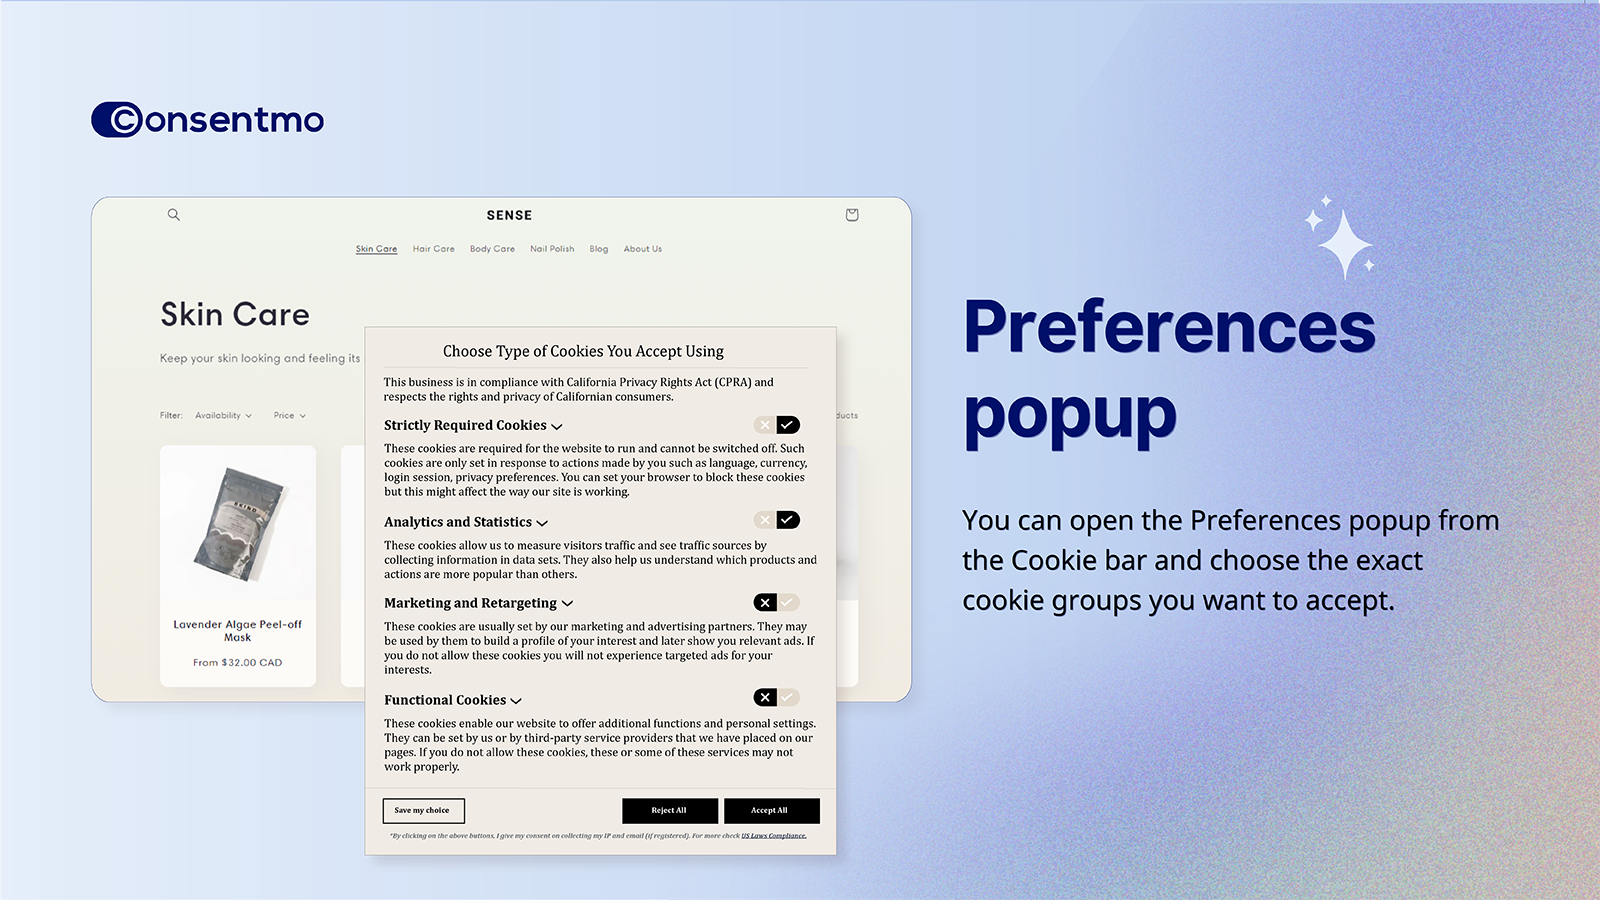 Consentmo Preferences popup detailing cookie acceptance options.